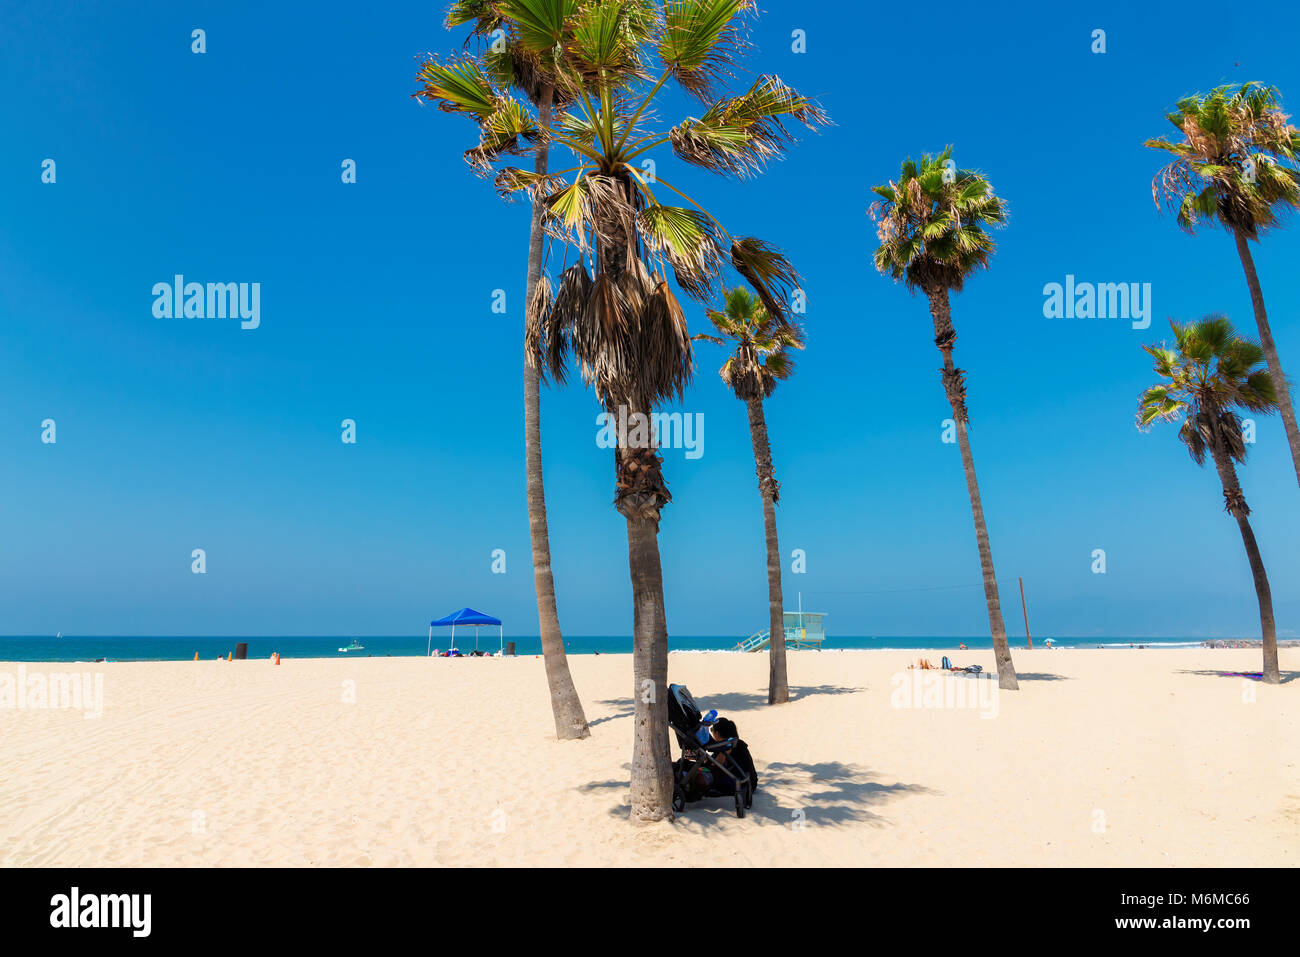 Palm trees on Manhattan beach at sunny day, Los Angeles, California. Stock Photo